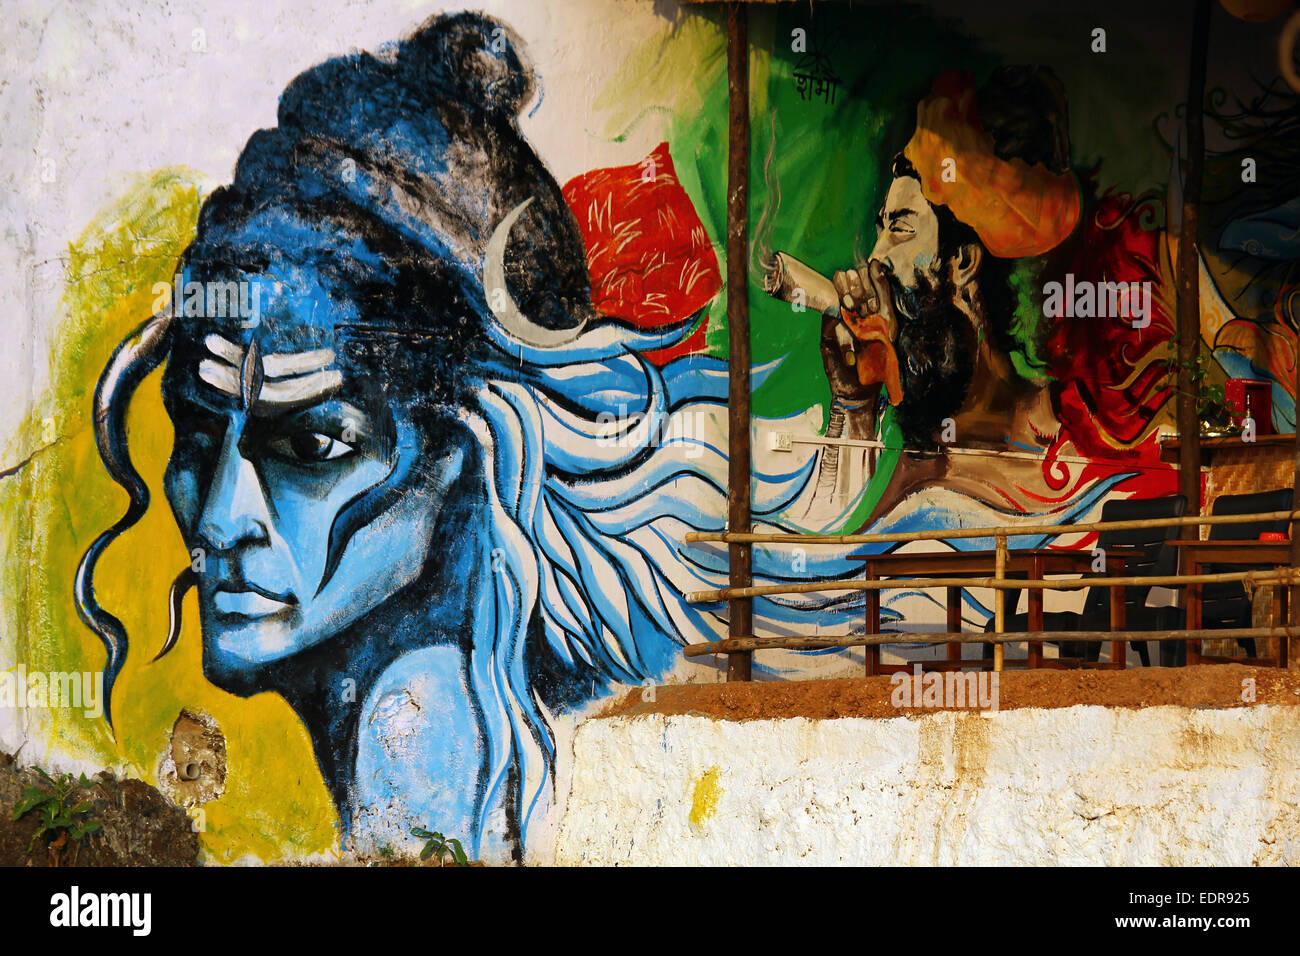 Wall graffiti de seigneur Shiva hindou et un homme de fumer de la marijuana Banque D'Images